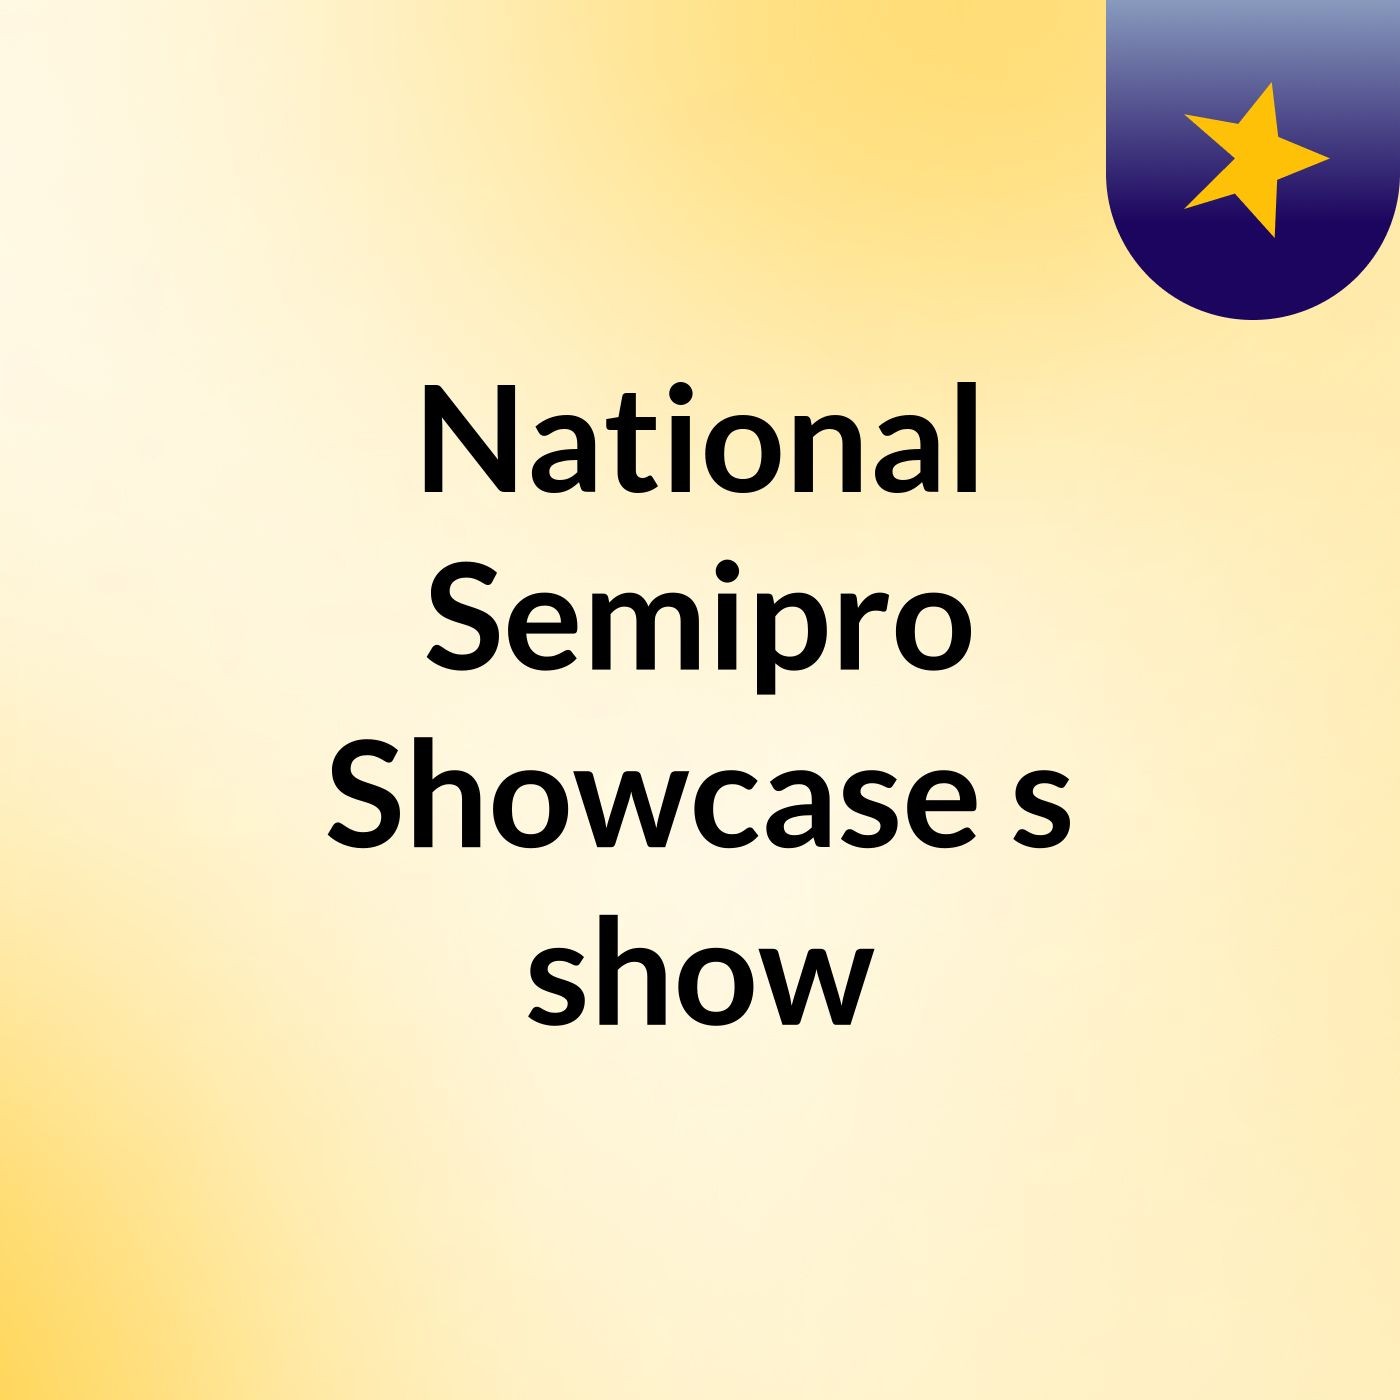 National Semipro Showcase's show